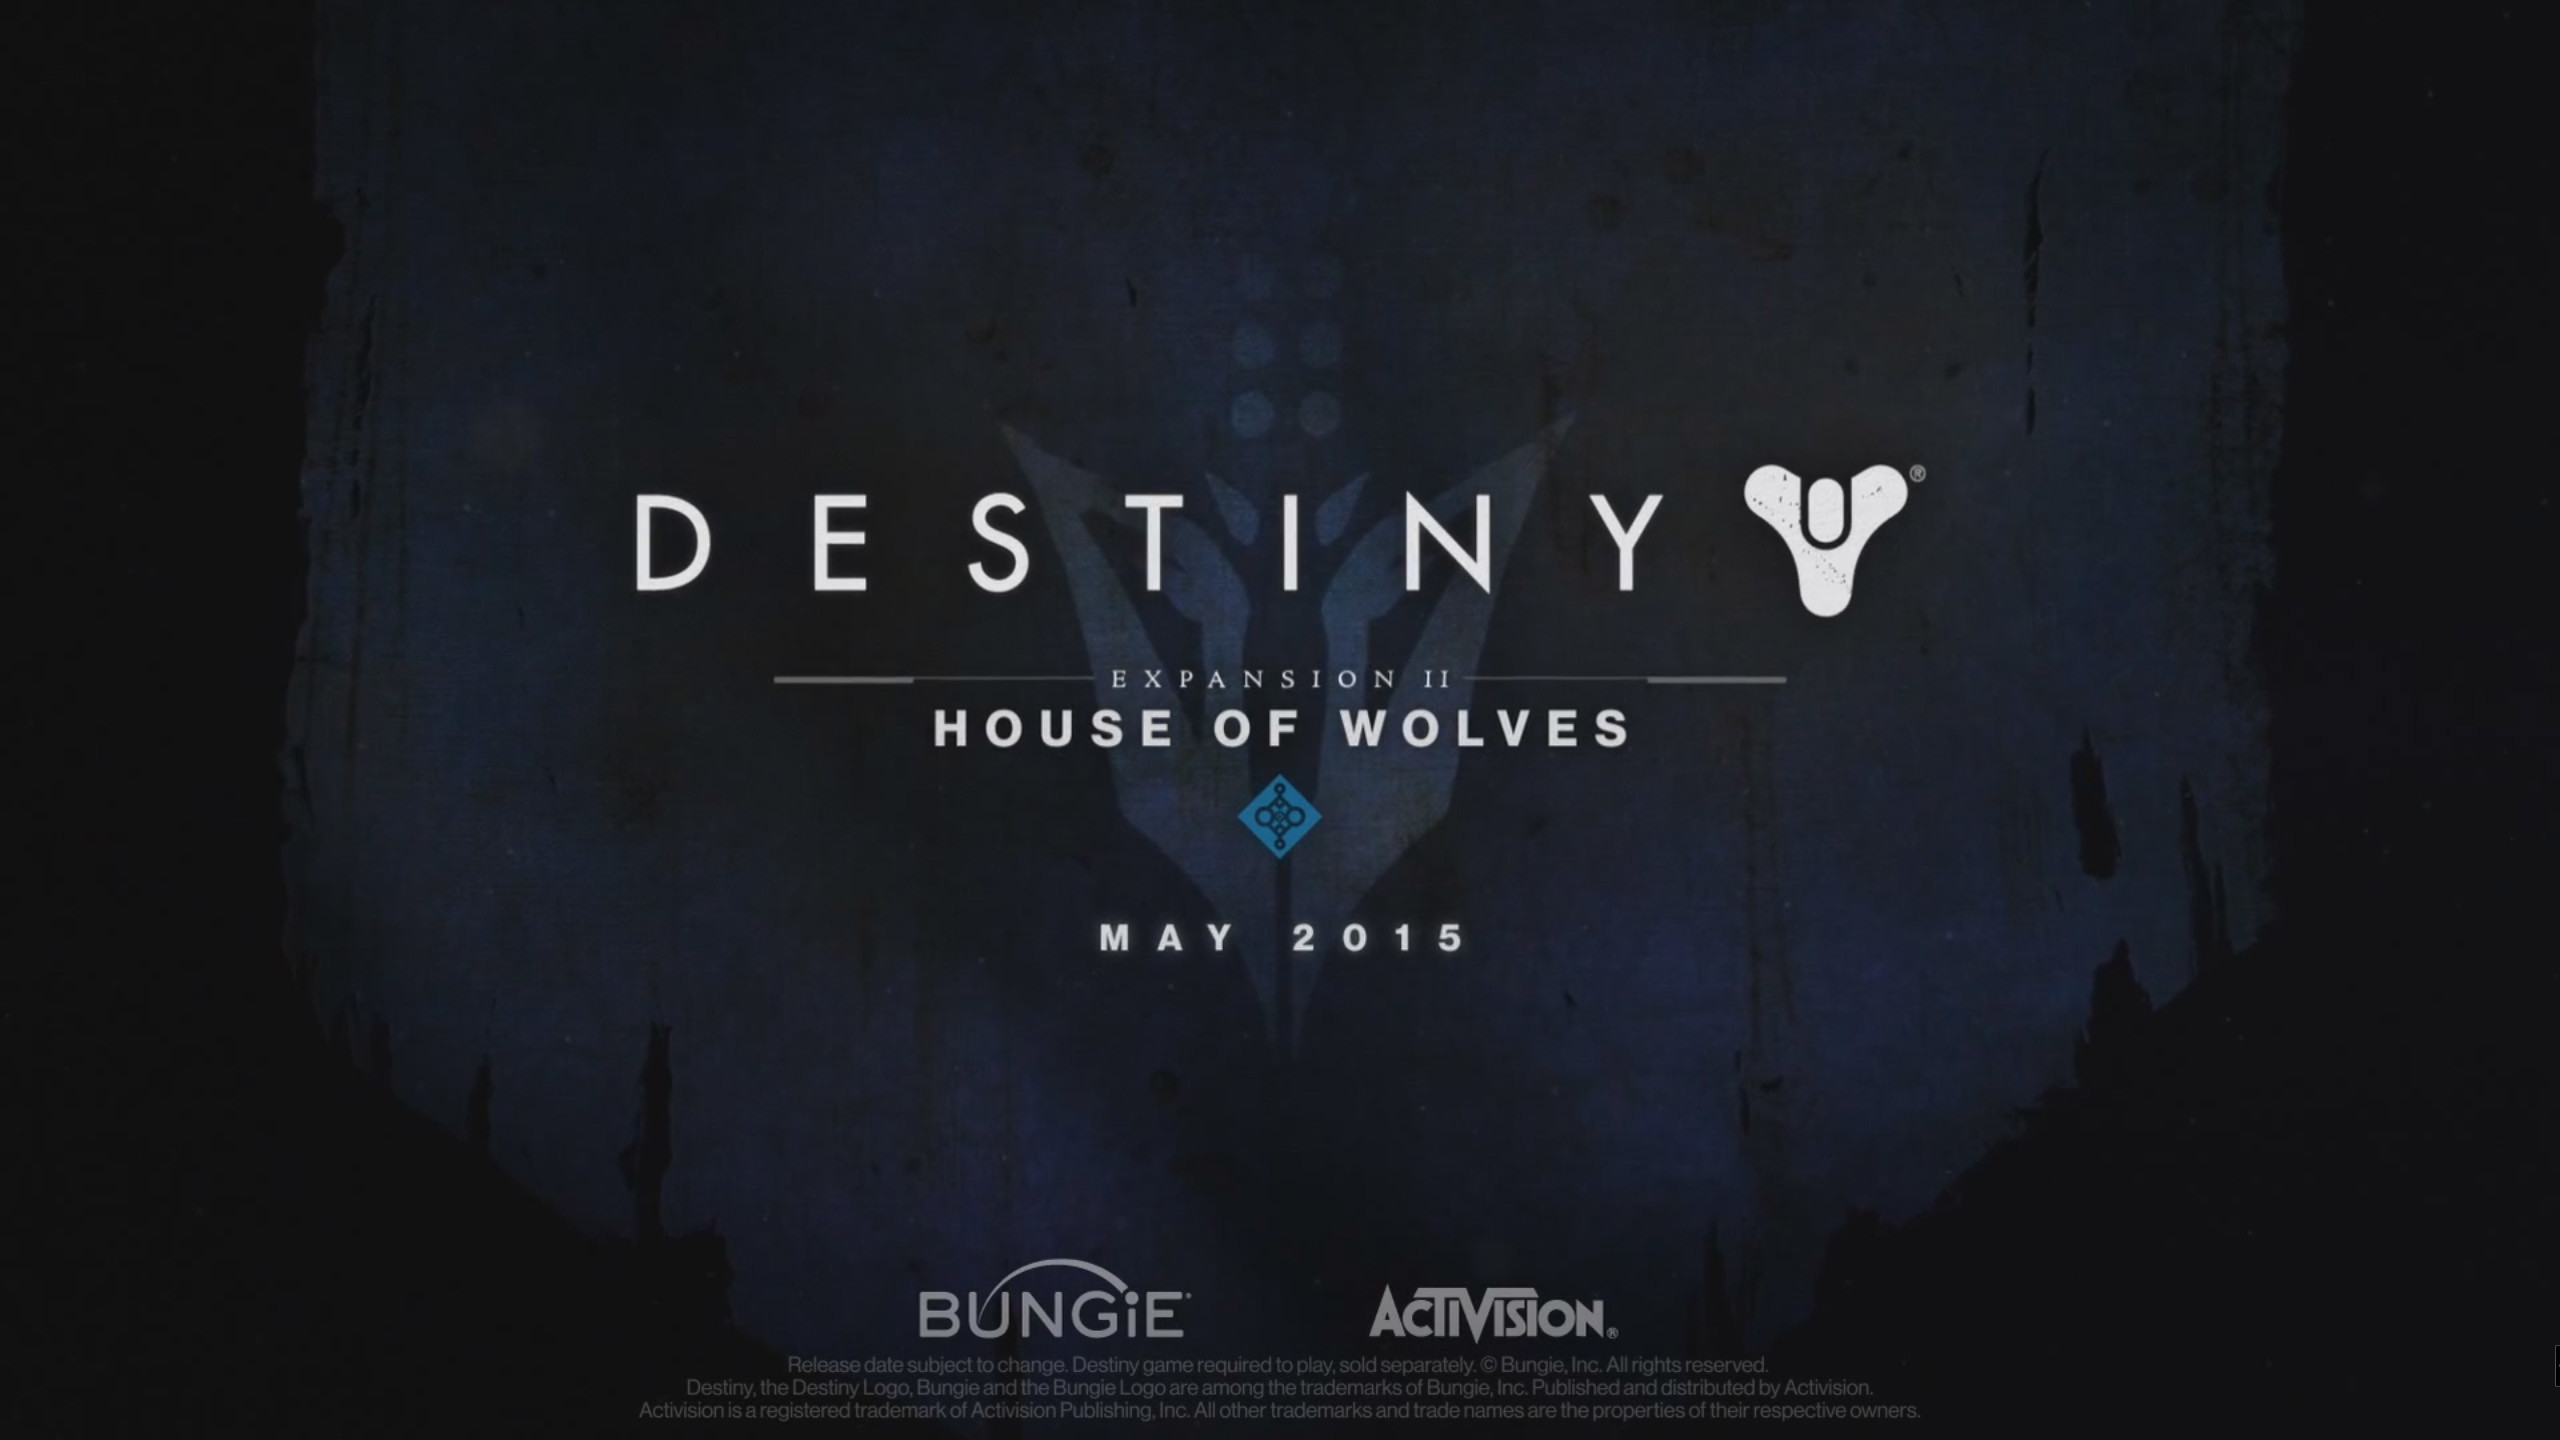 2560x1440 Destiny's House of Wolves DLC Information